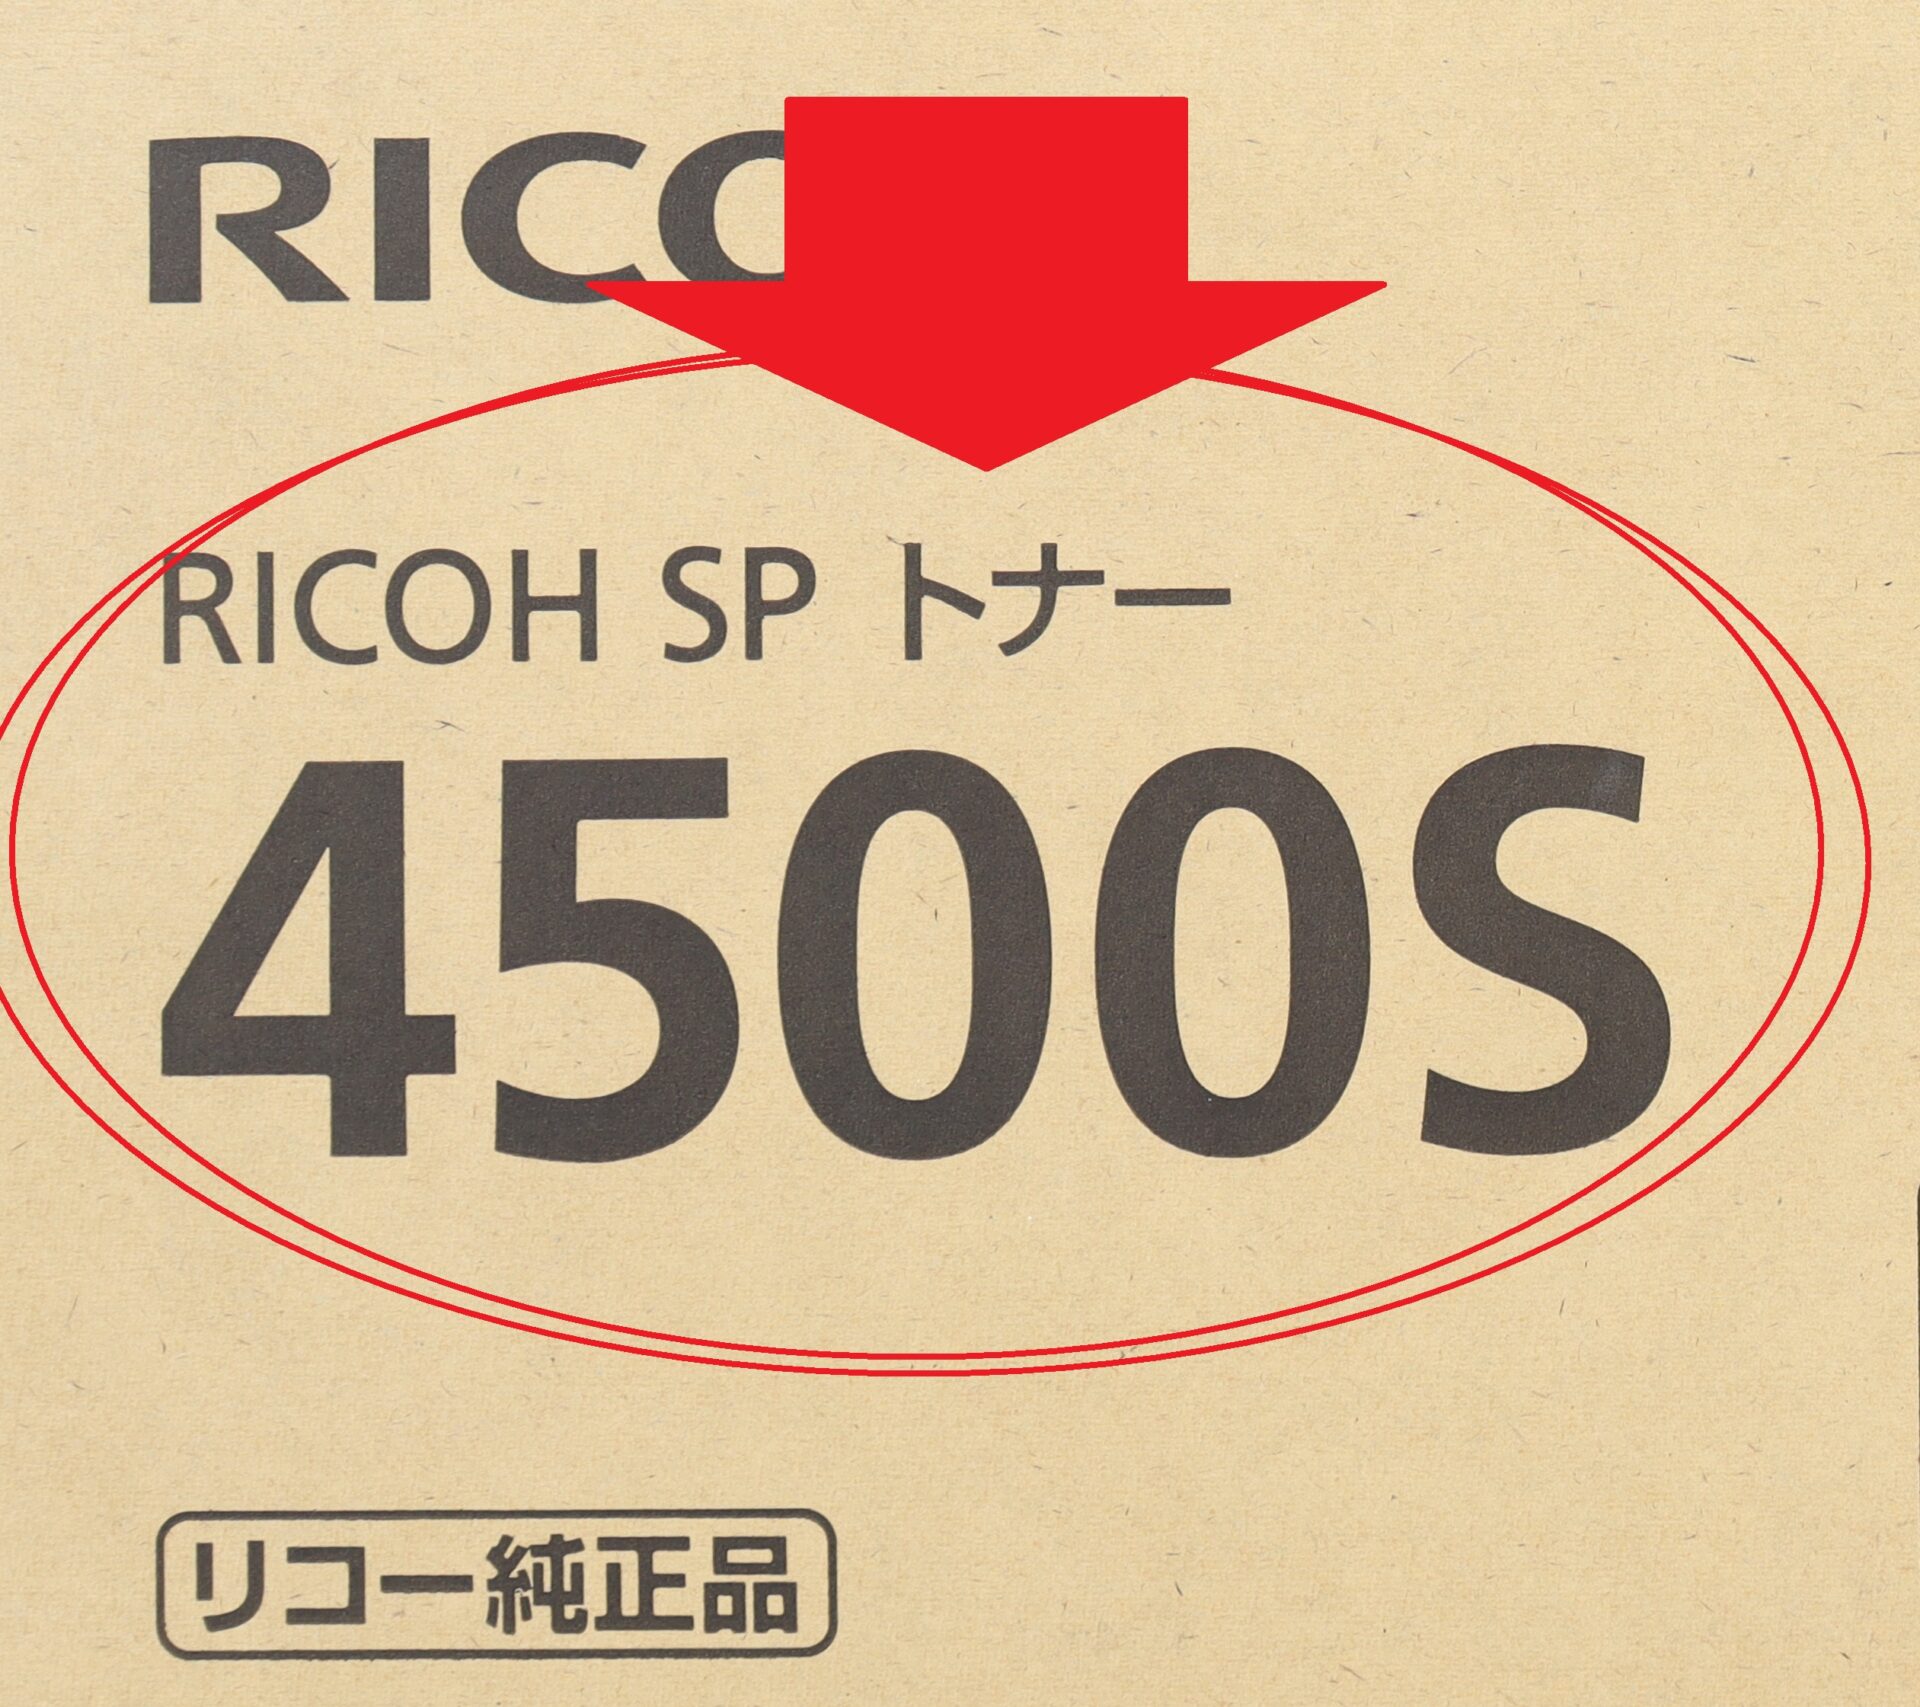 RICOH SPトナー 4500S 型番